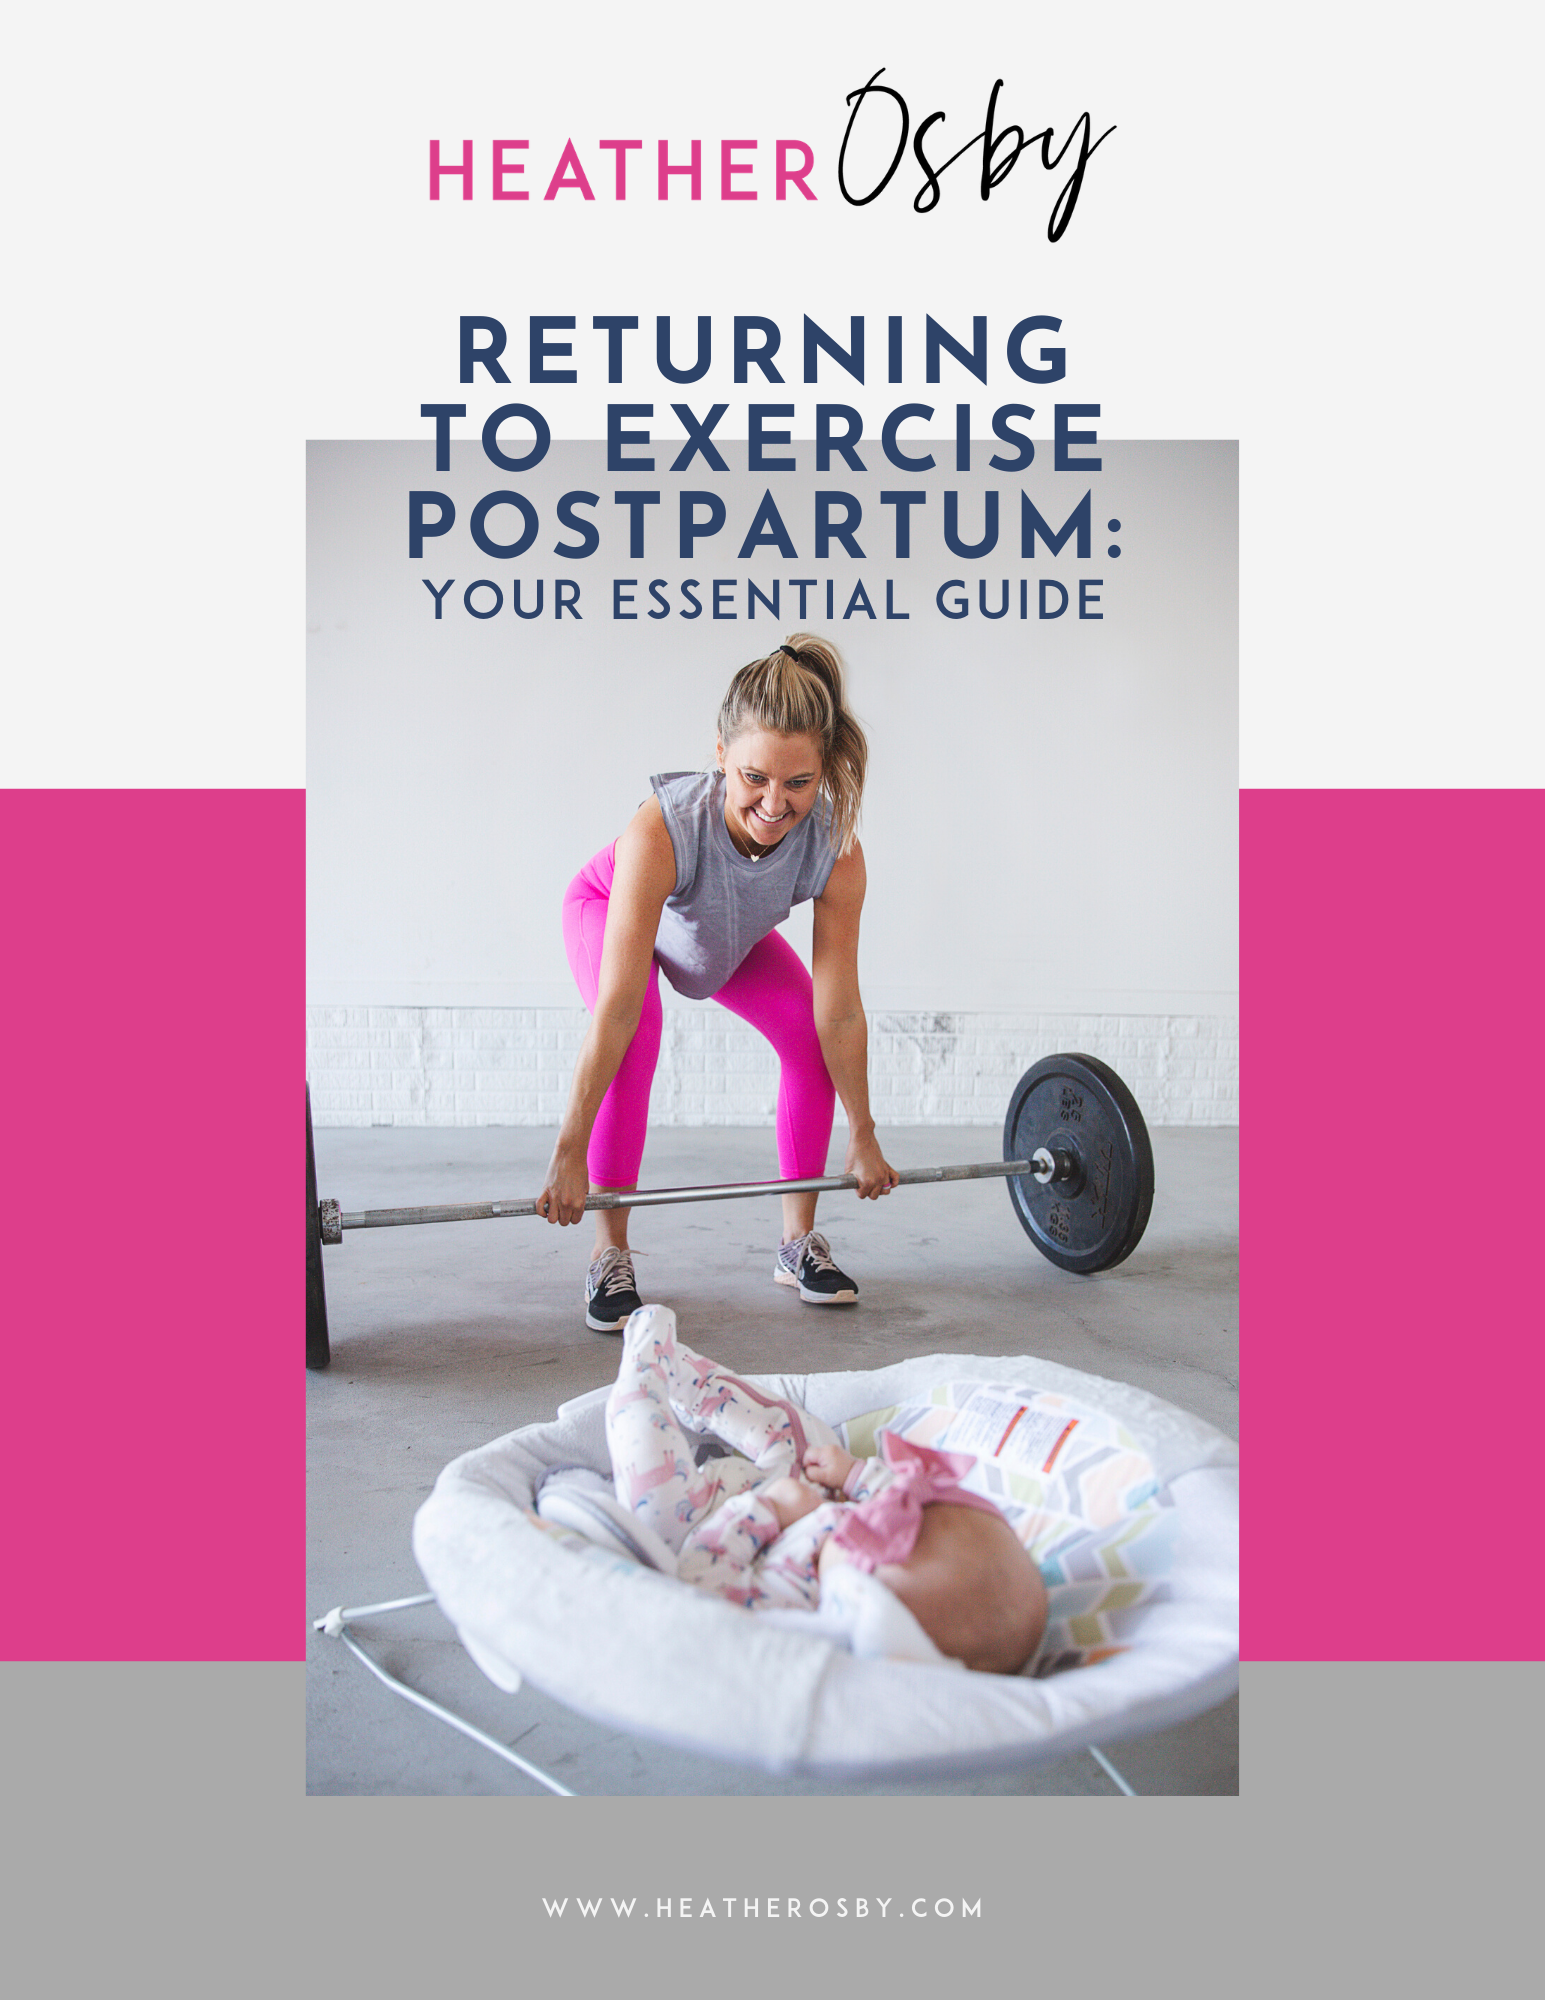 3 Tips on Returning to Intense Exercise Postpartum